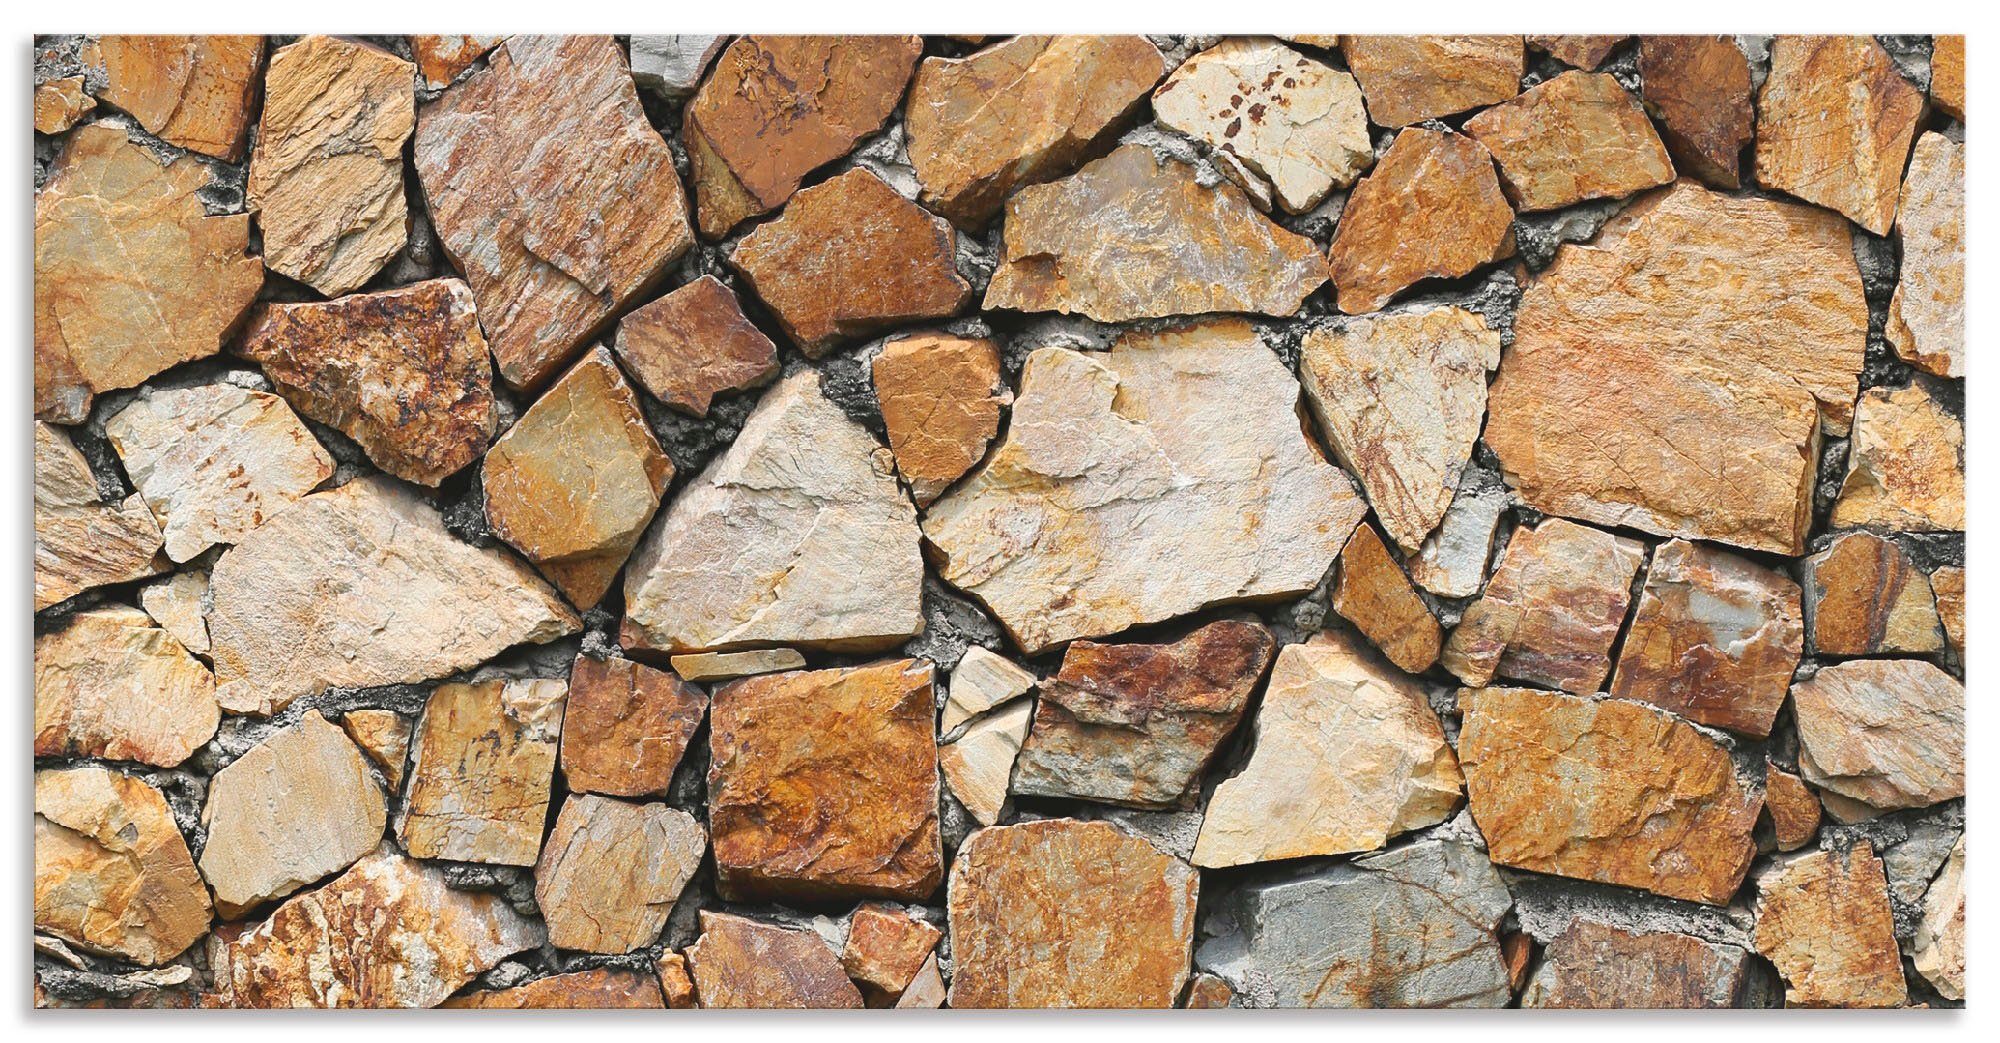 Artland Keukenwand Bruine stenen muur zelfklevend in vele maten - spatscherm keuken achter kookplaat en spoelbak als wandbescherming tegen vet, water en vuil - achterwand, wandbekl